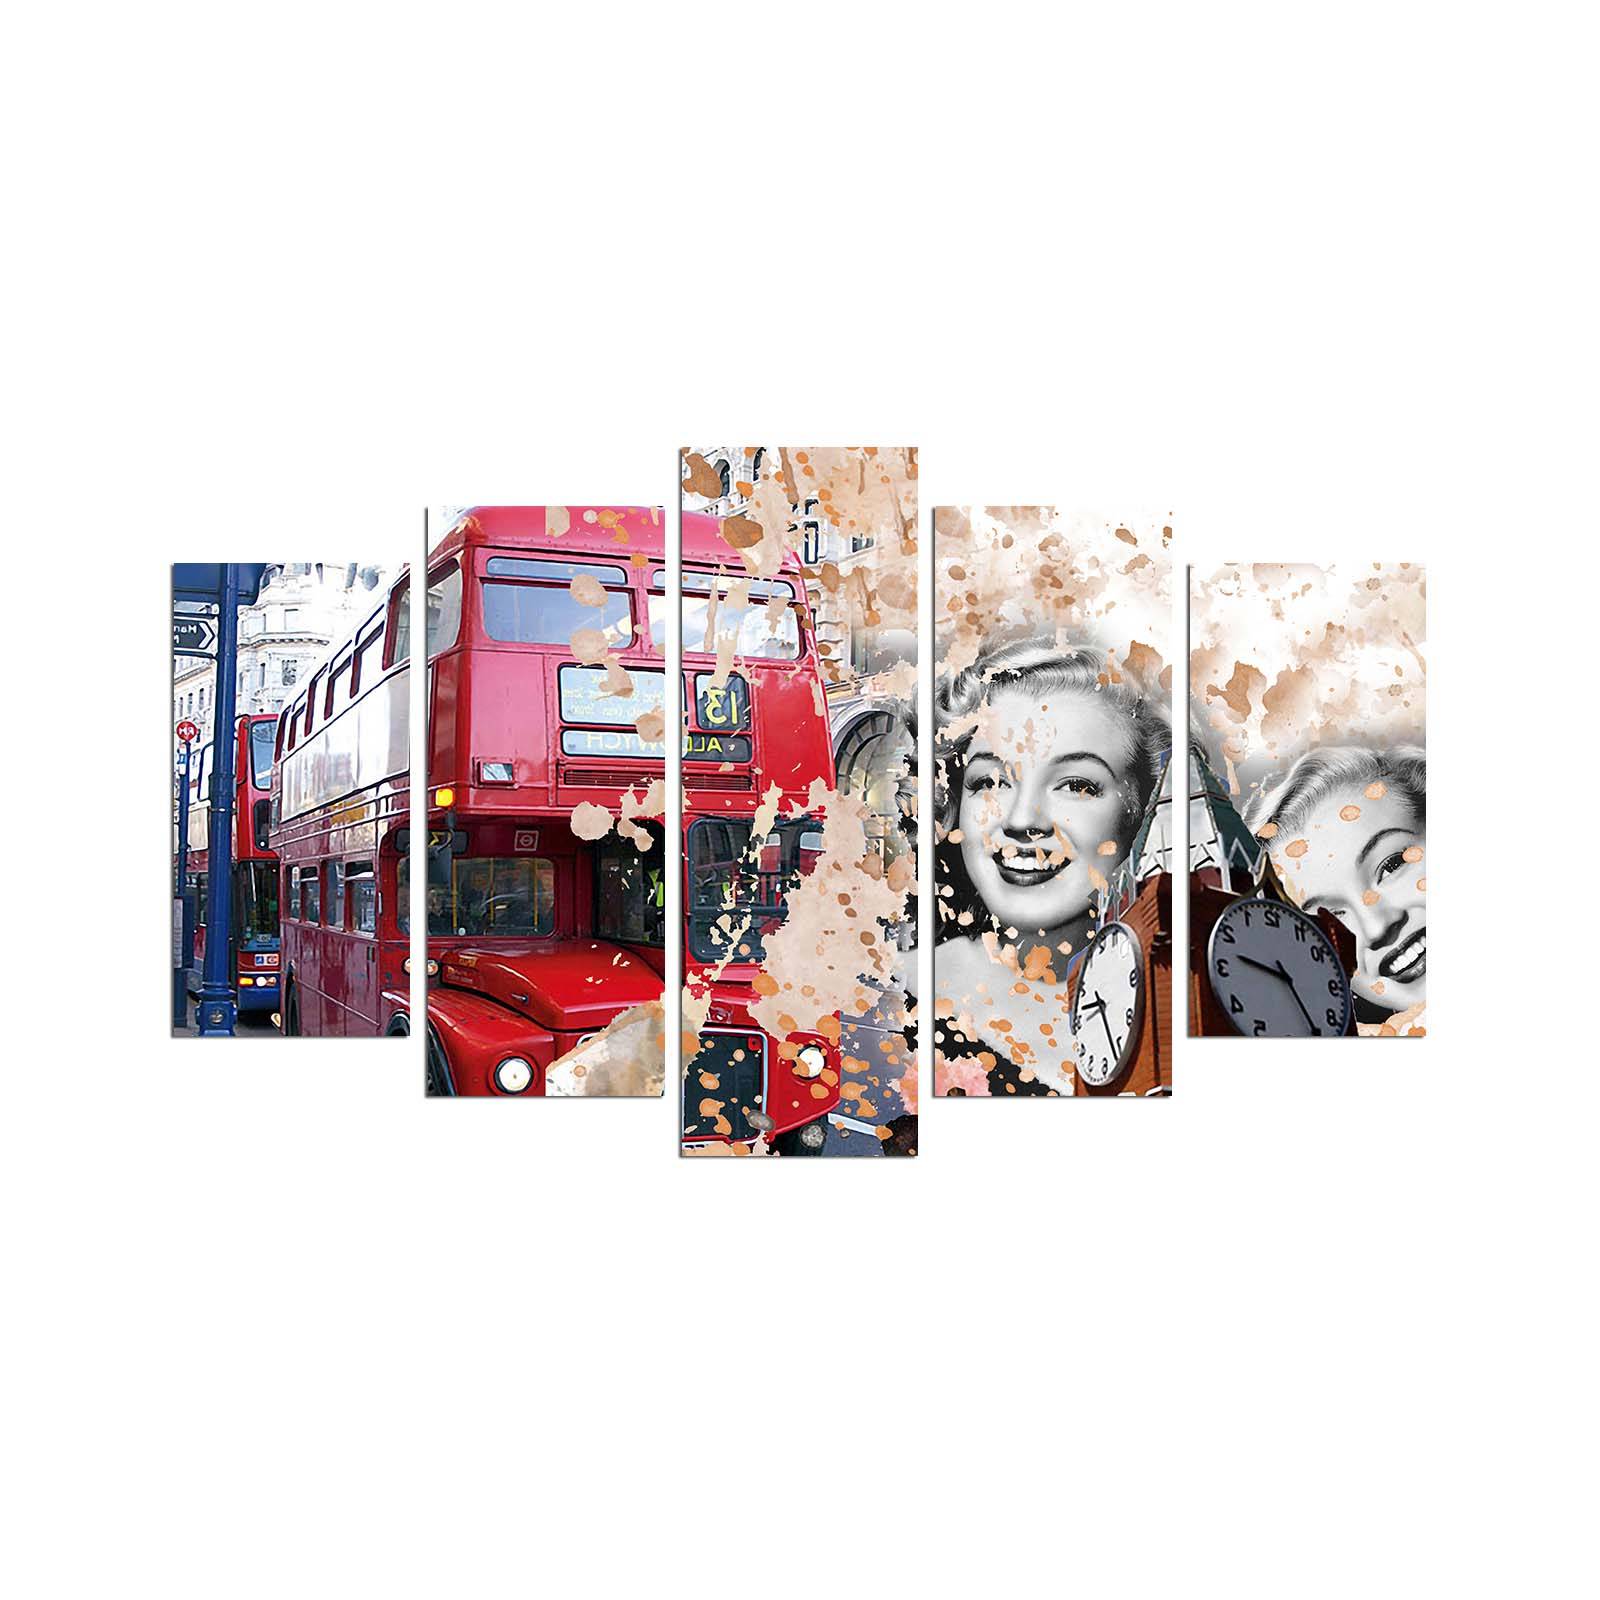 Pentaptyque Grex Bus de Londres et Marilyne Monroe Rouge et Beige